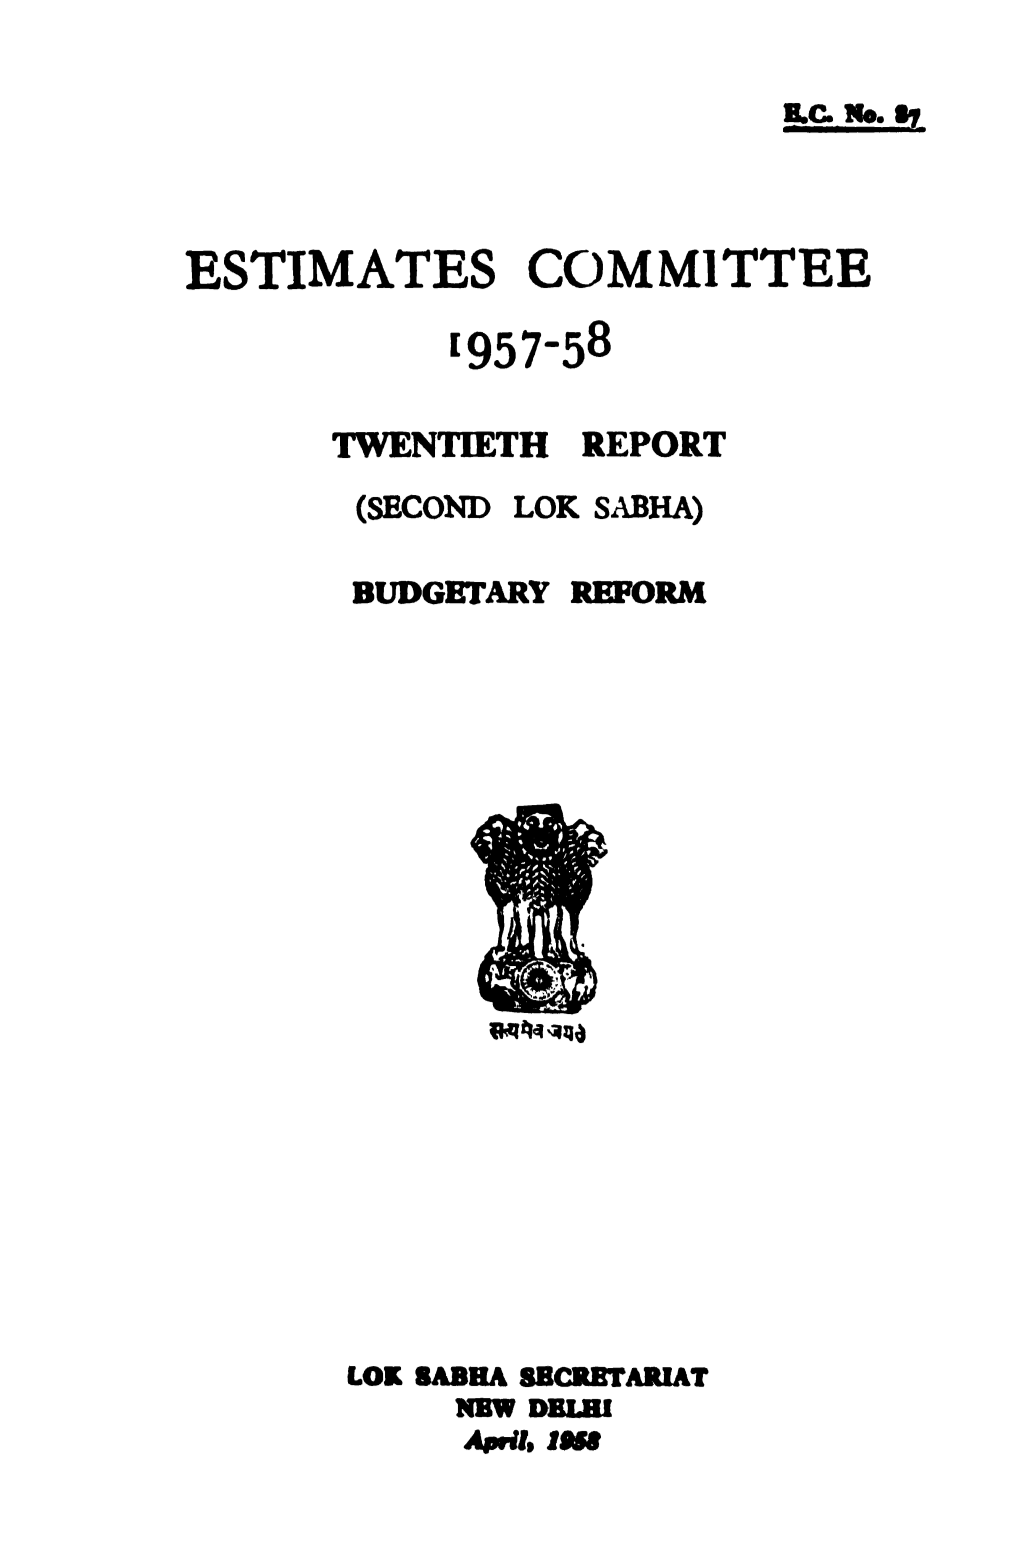 Estimates Committee Twentieth Report